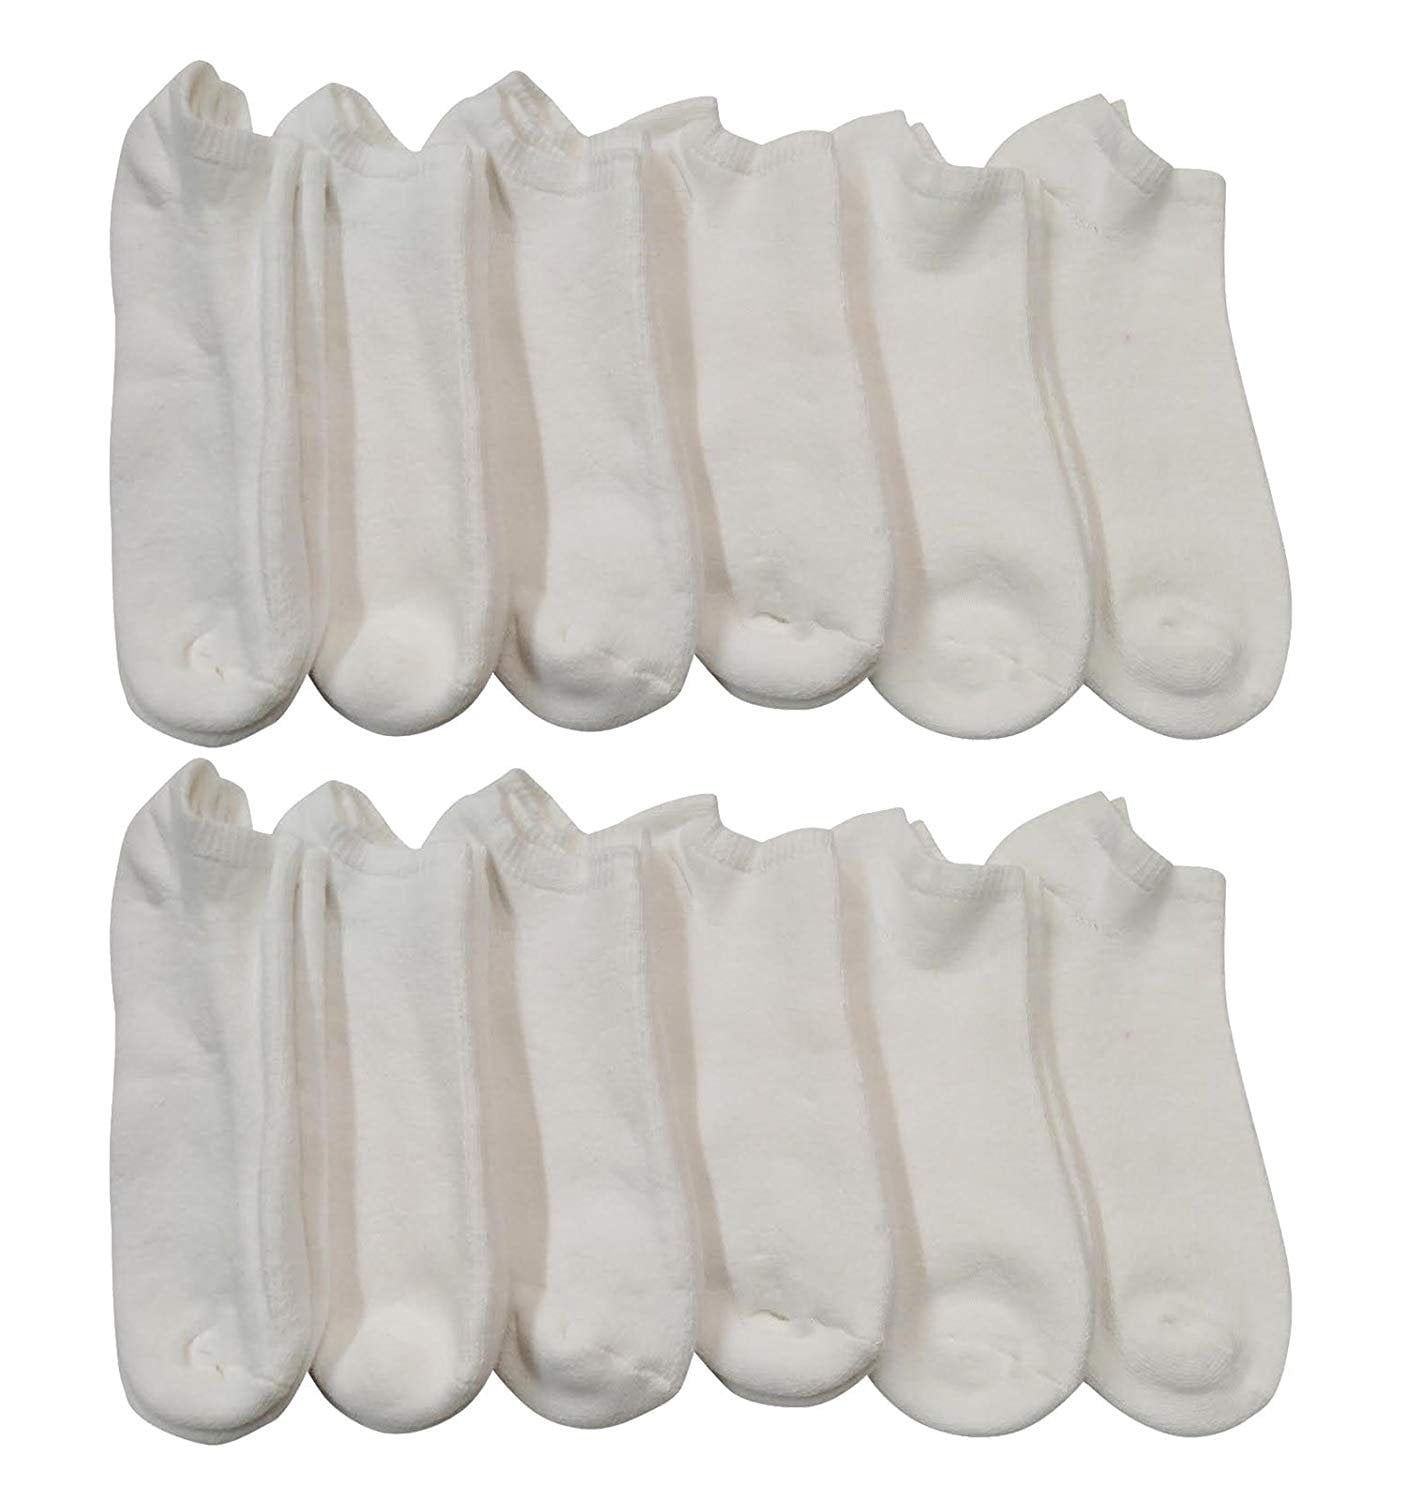 Heavyweight Durable Cotton Athletic White Crew Sock, 12 Pair Bulk Pack